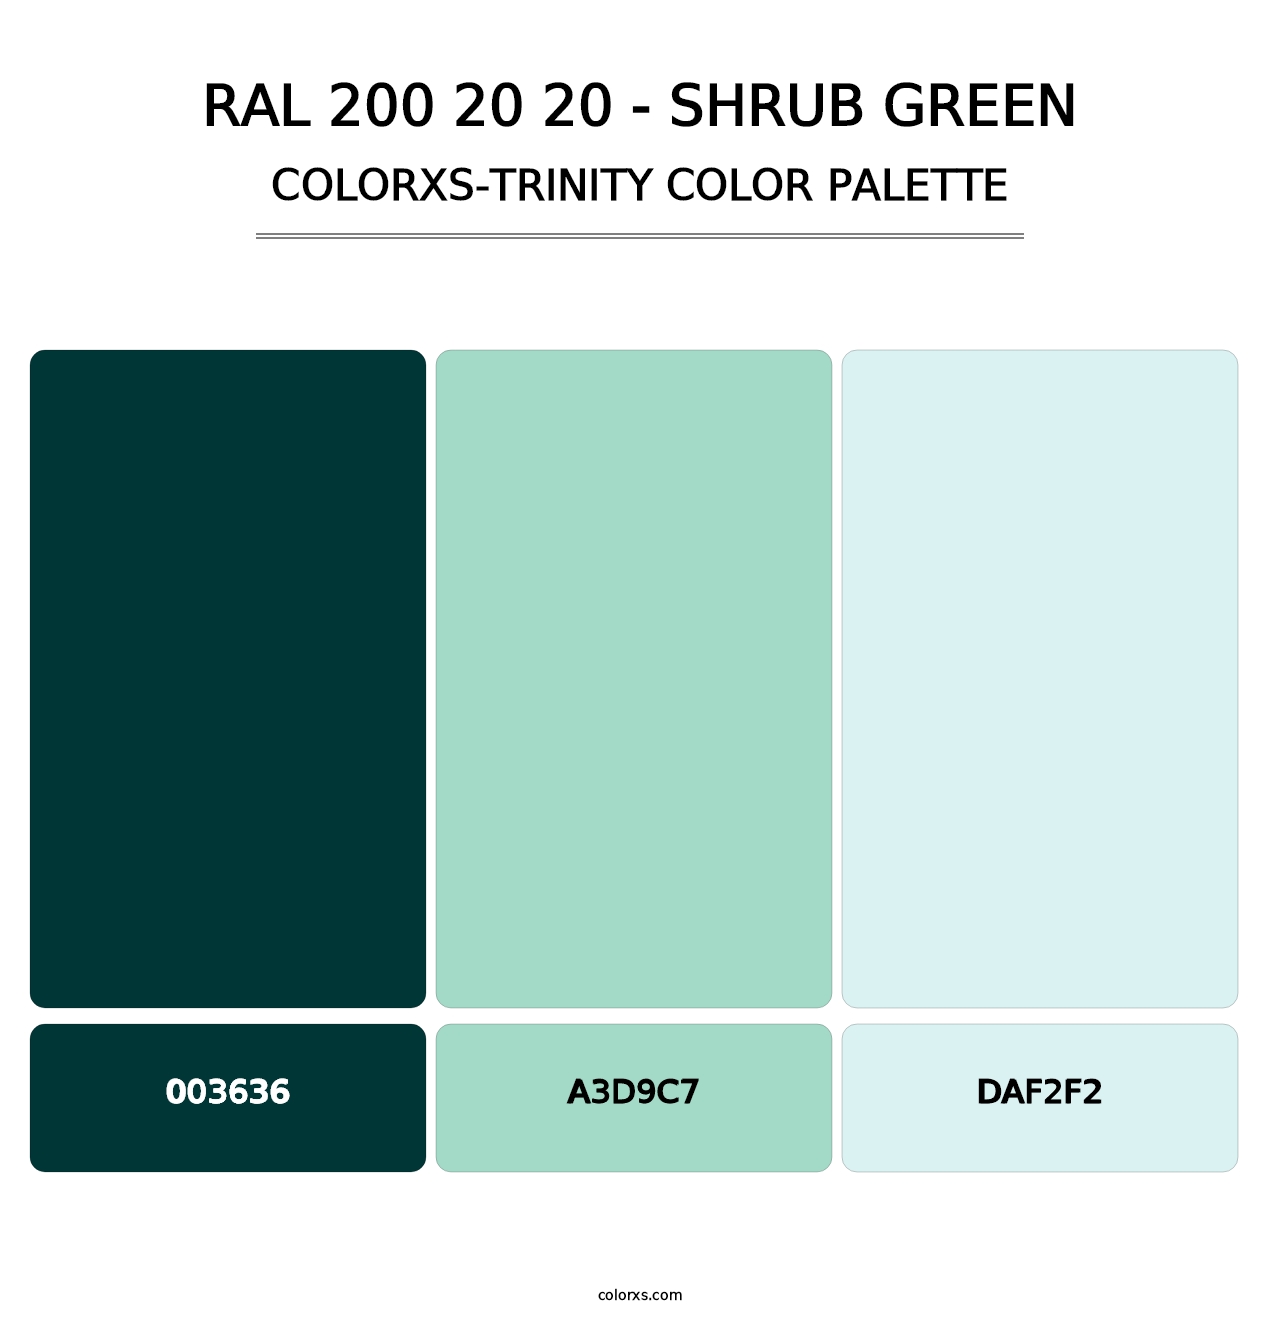 RAL 200 20 20 - Shrub Green - Colorxs Trinity Palette